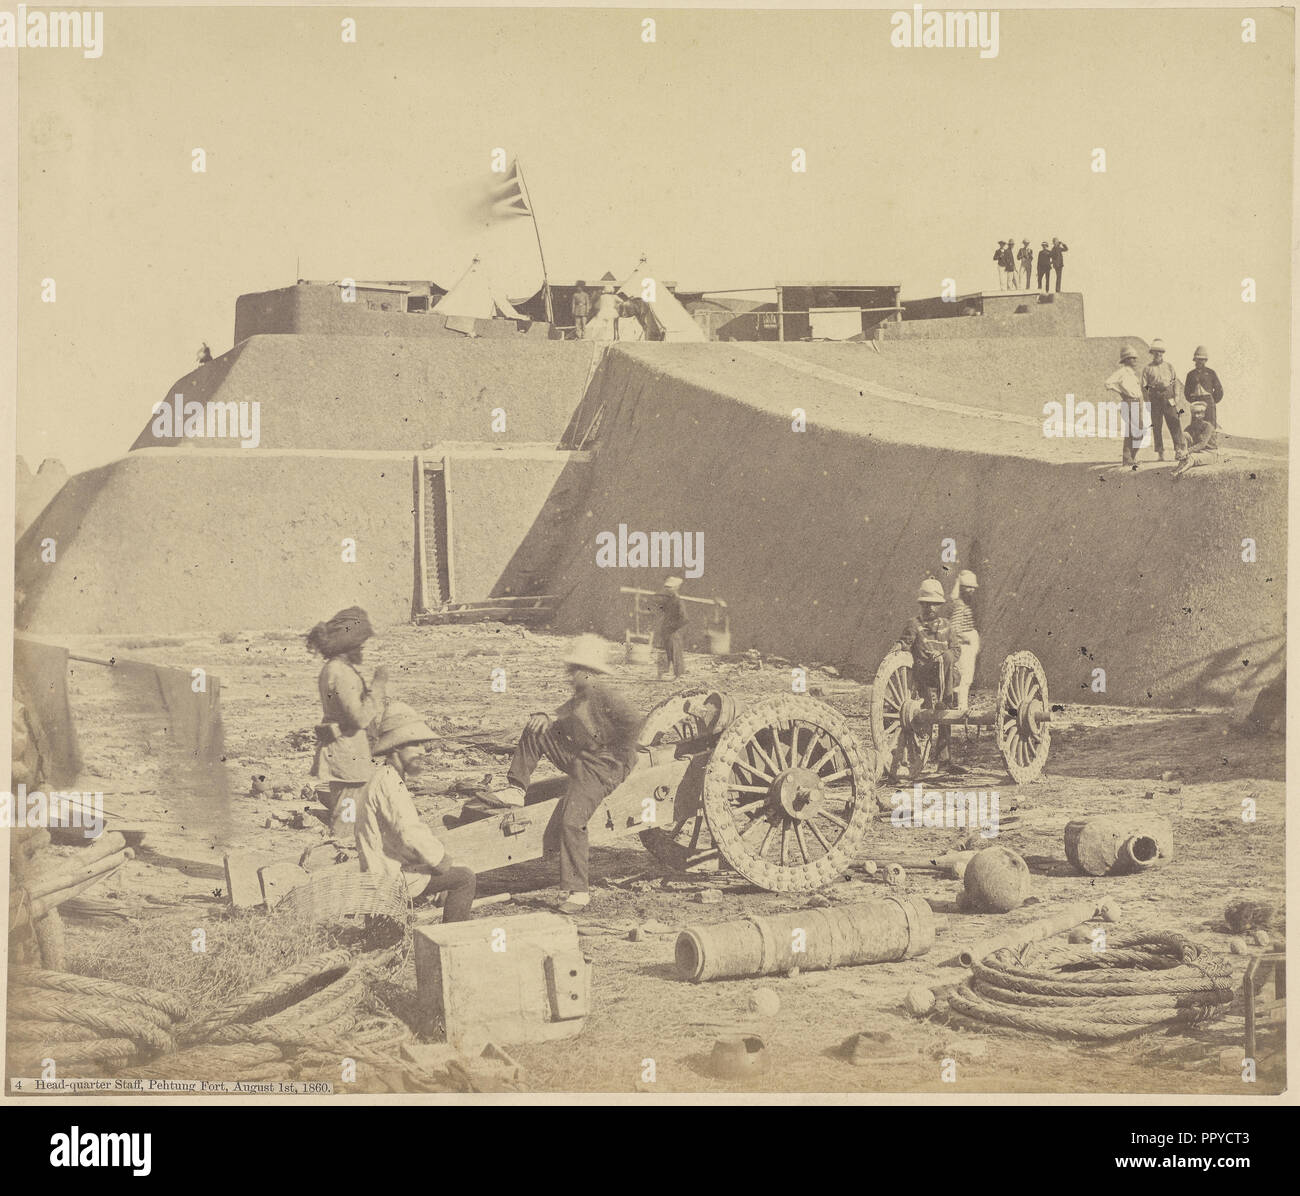 Headquarter Staff, Pehtang Fort; Felice Beato, 1832 - 1909, August 1, 1860; Albumen silver print Stock Photo